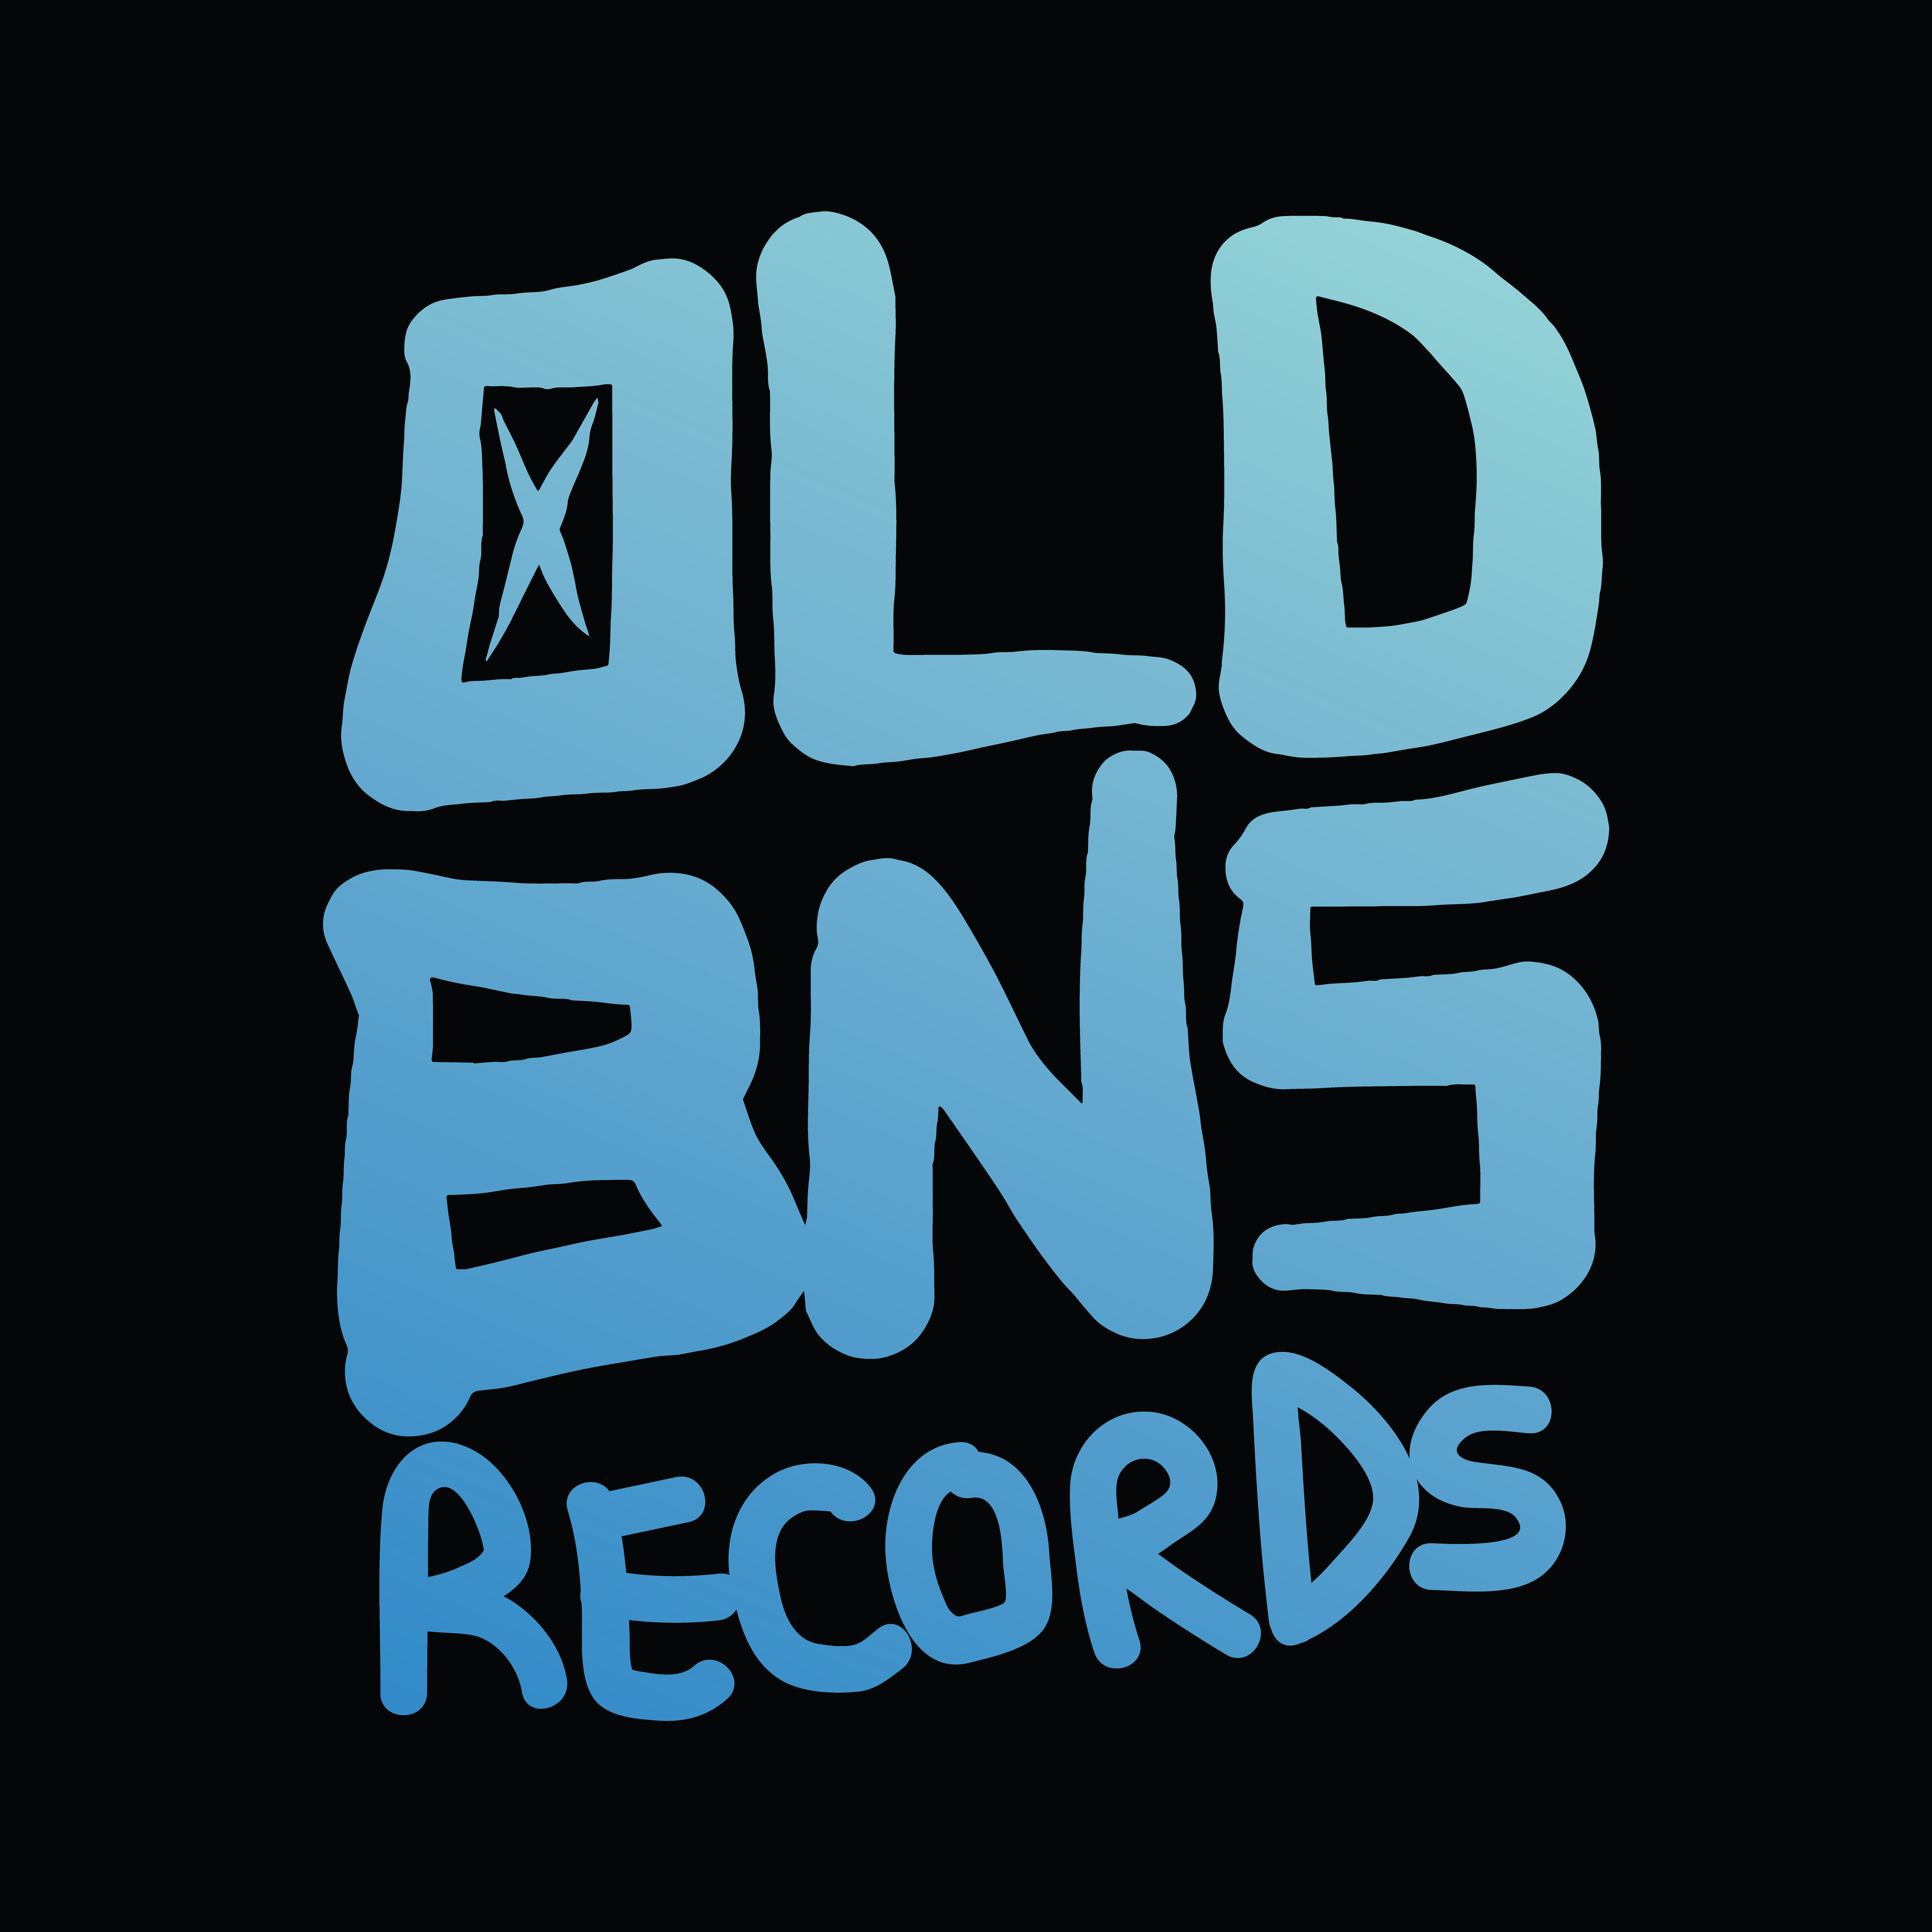 Old Bns Rec playlist